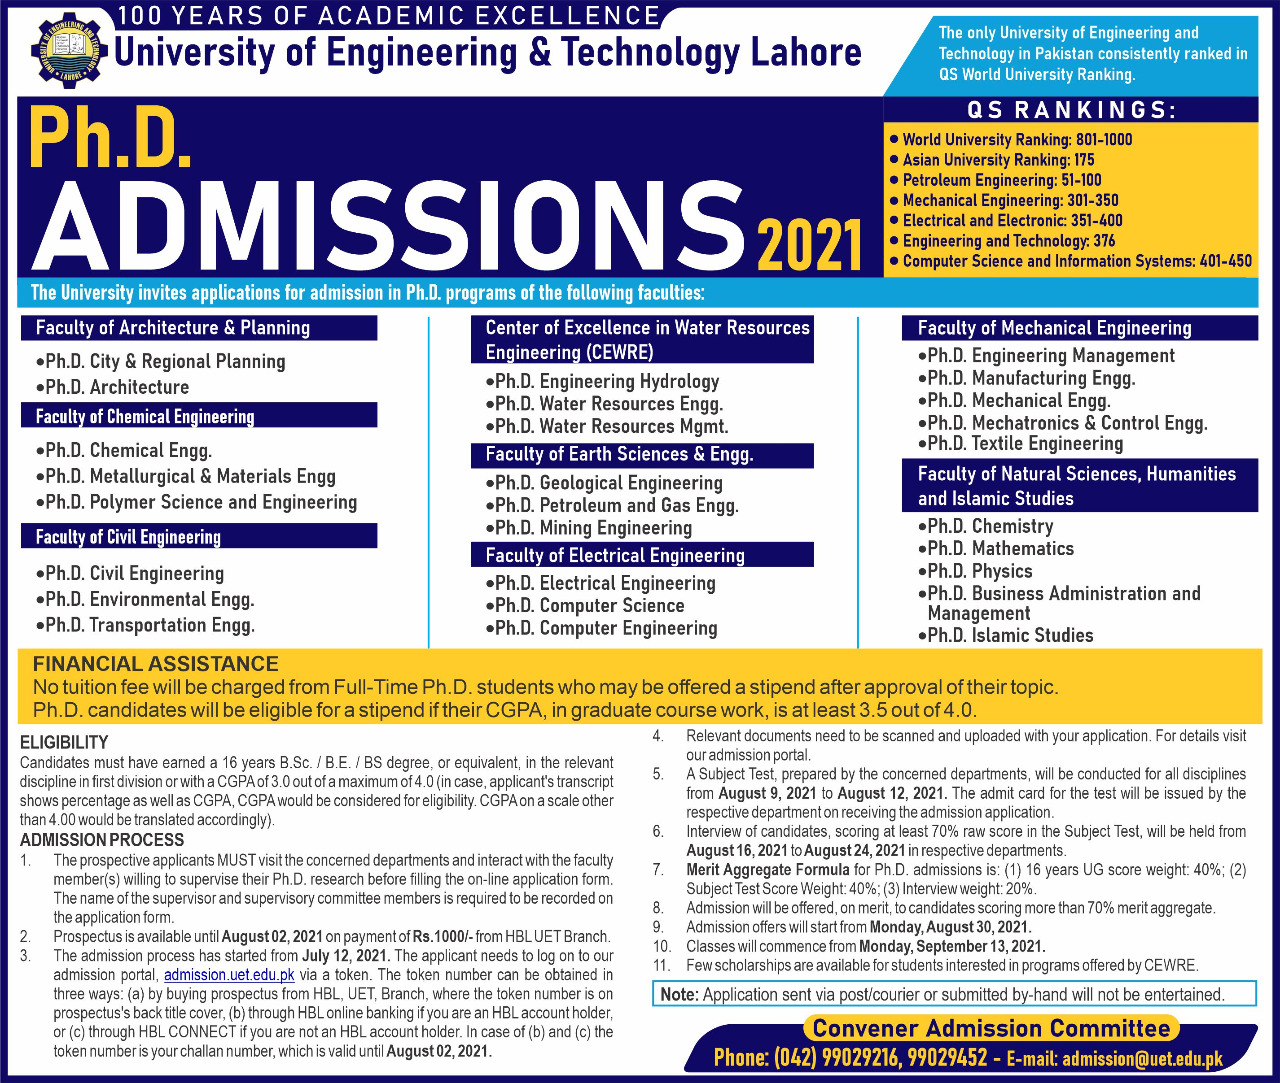 UET announces admission schedule